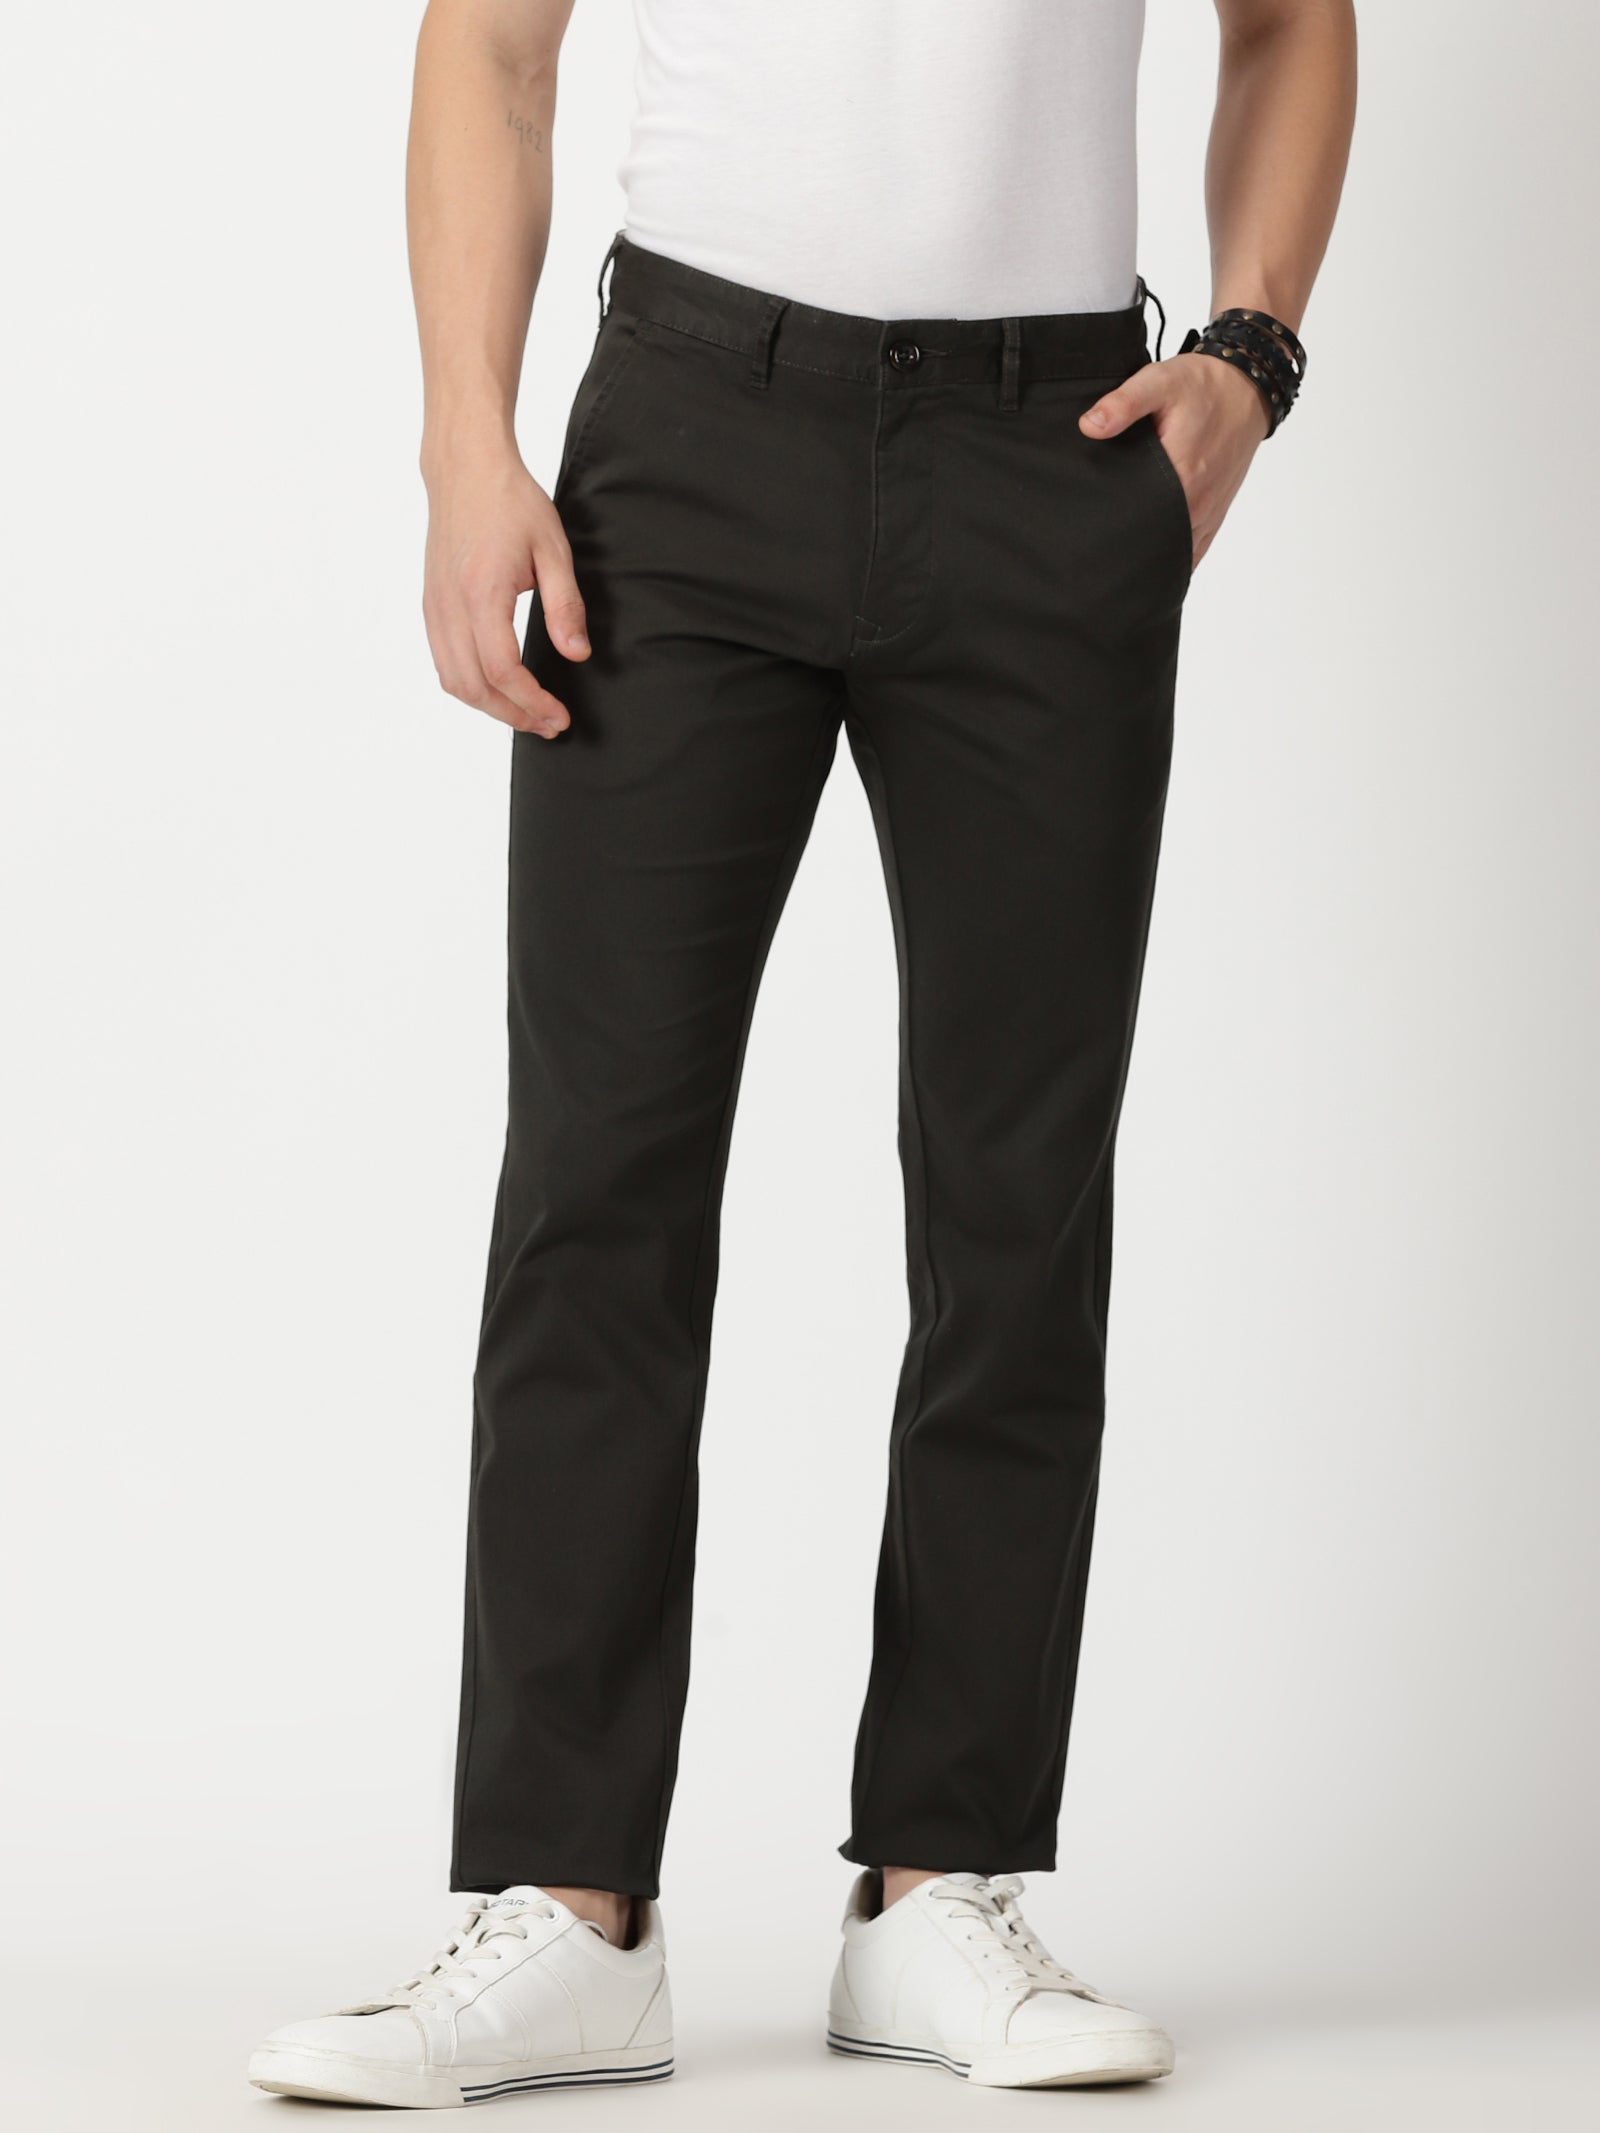 Buy Brown Trousers & Pants for Men by NEXT LOOK Online | Ajio.com